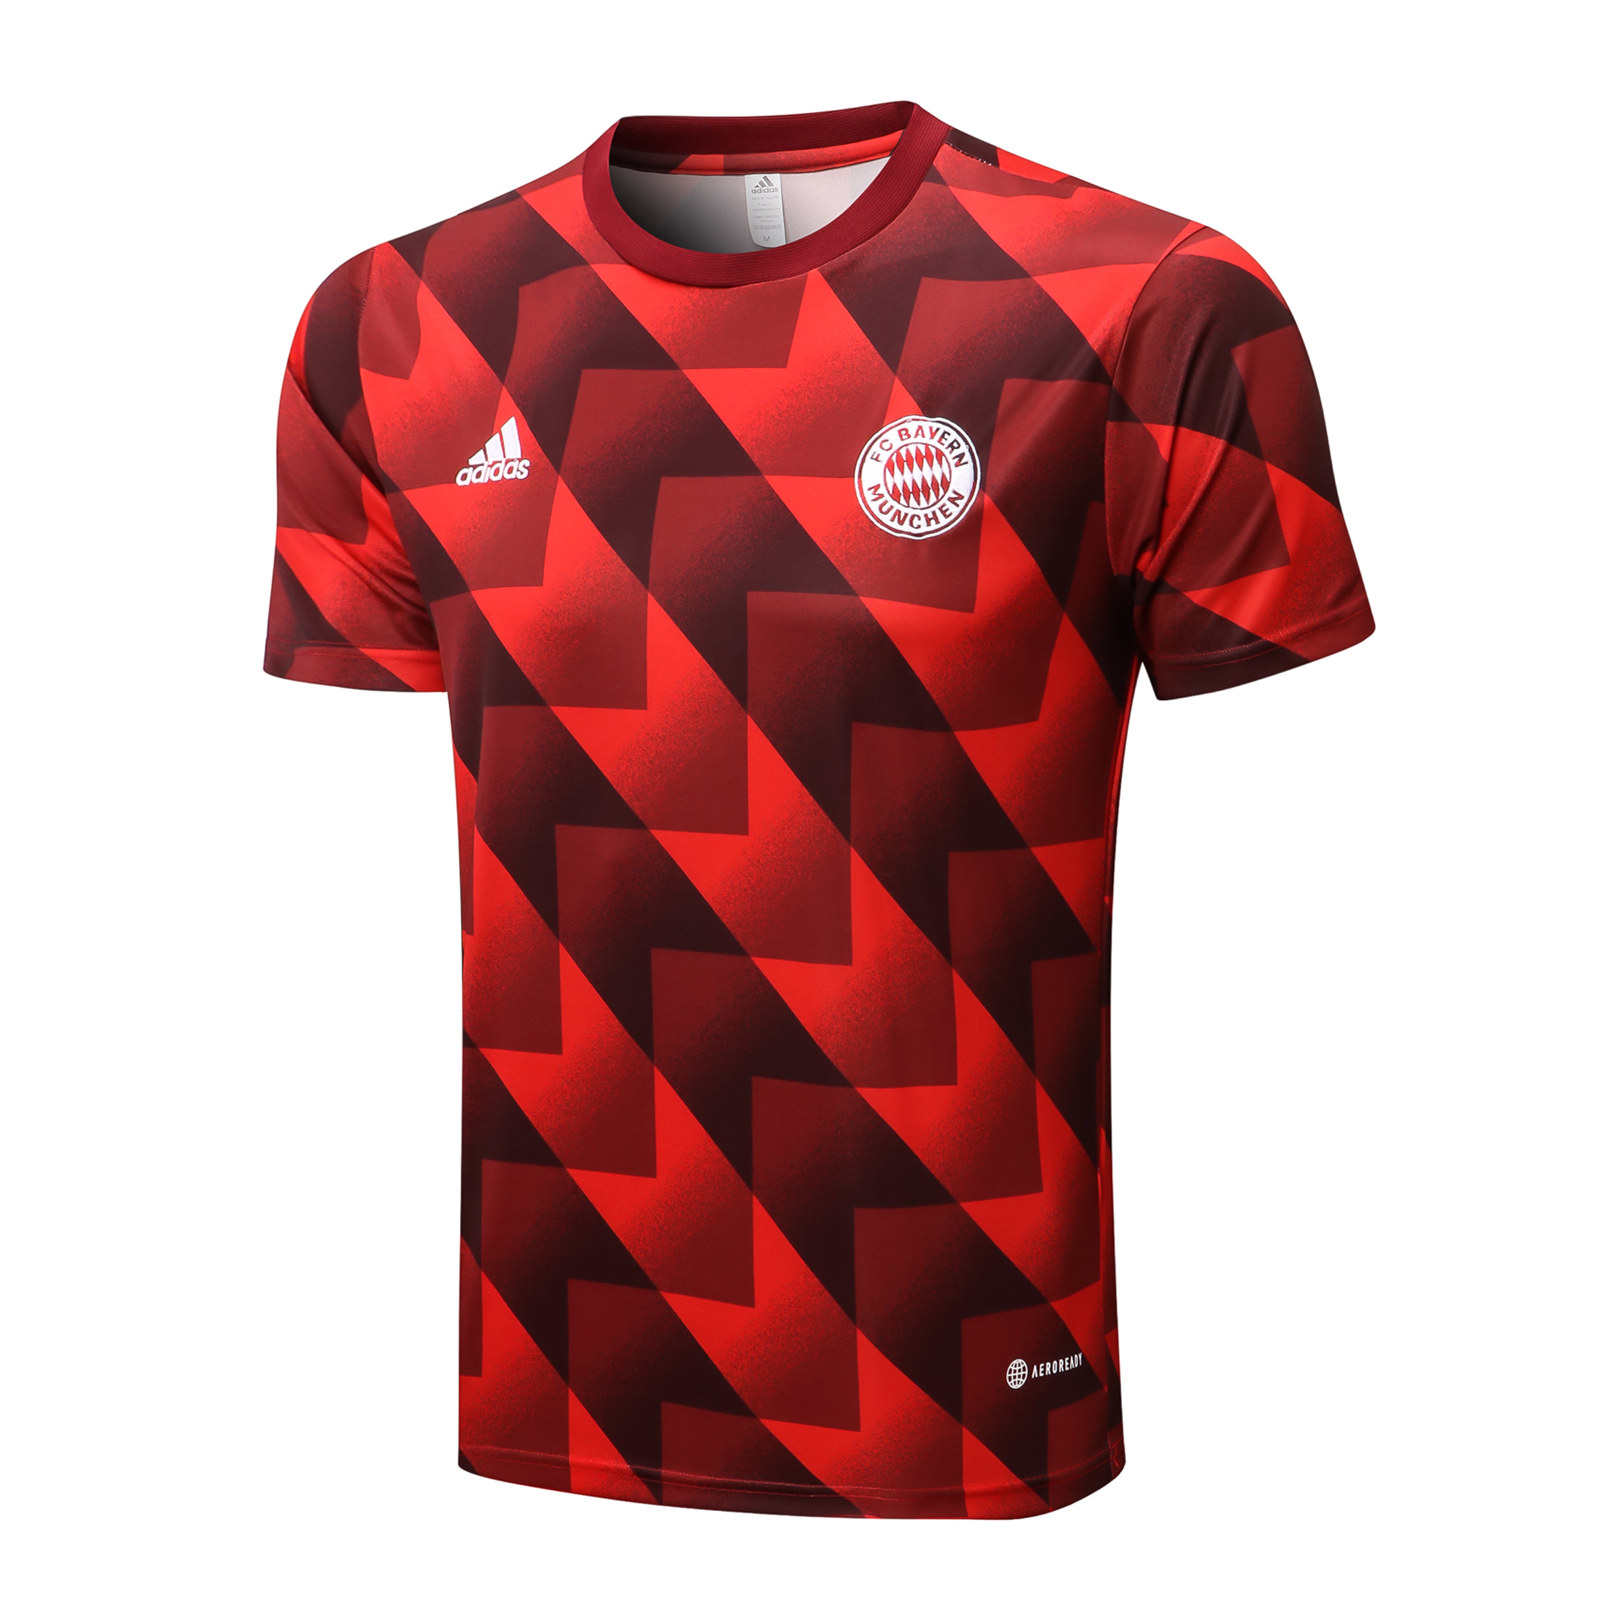 Men's Adidas FC Bayern Pre-Match Jersey - Red - Small